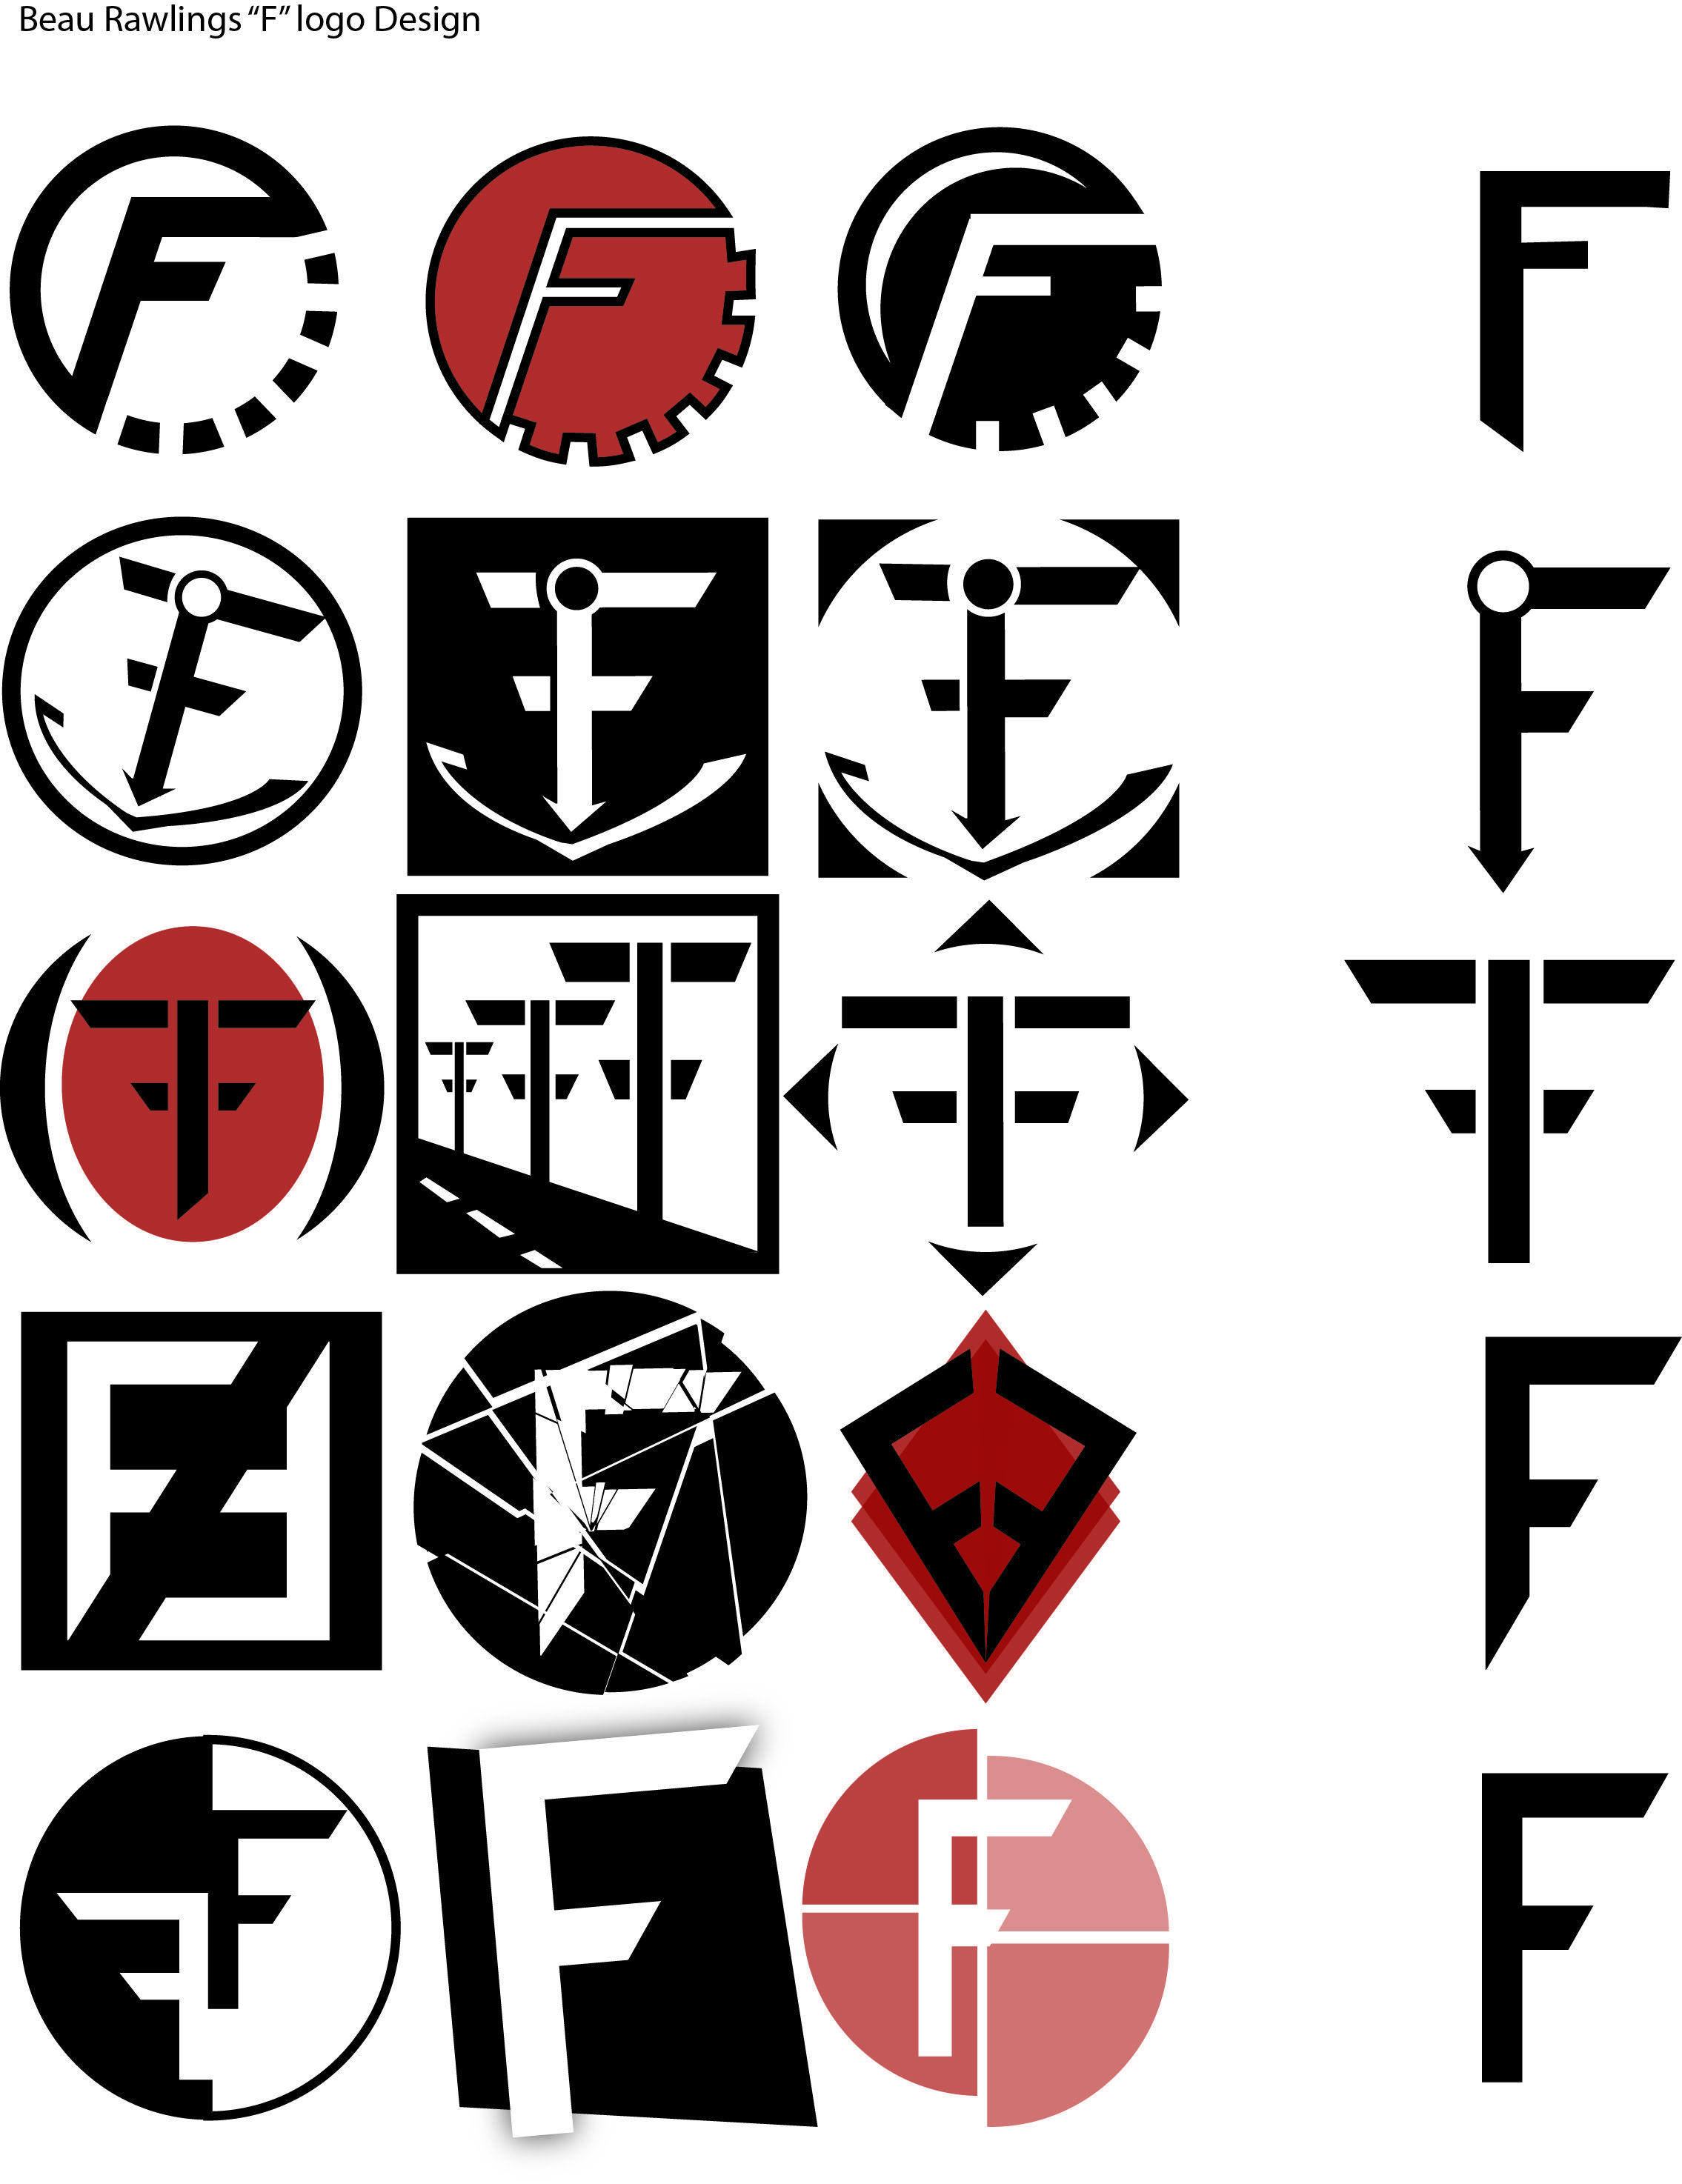 Fancy F Logo - bohamr. Just another WordPress.com site